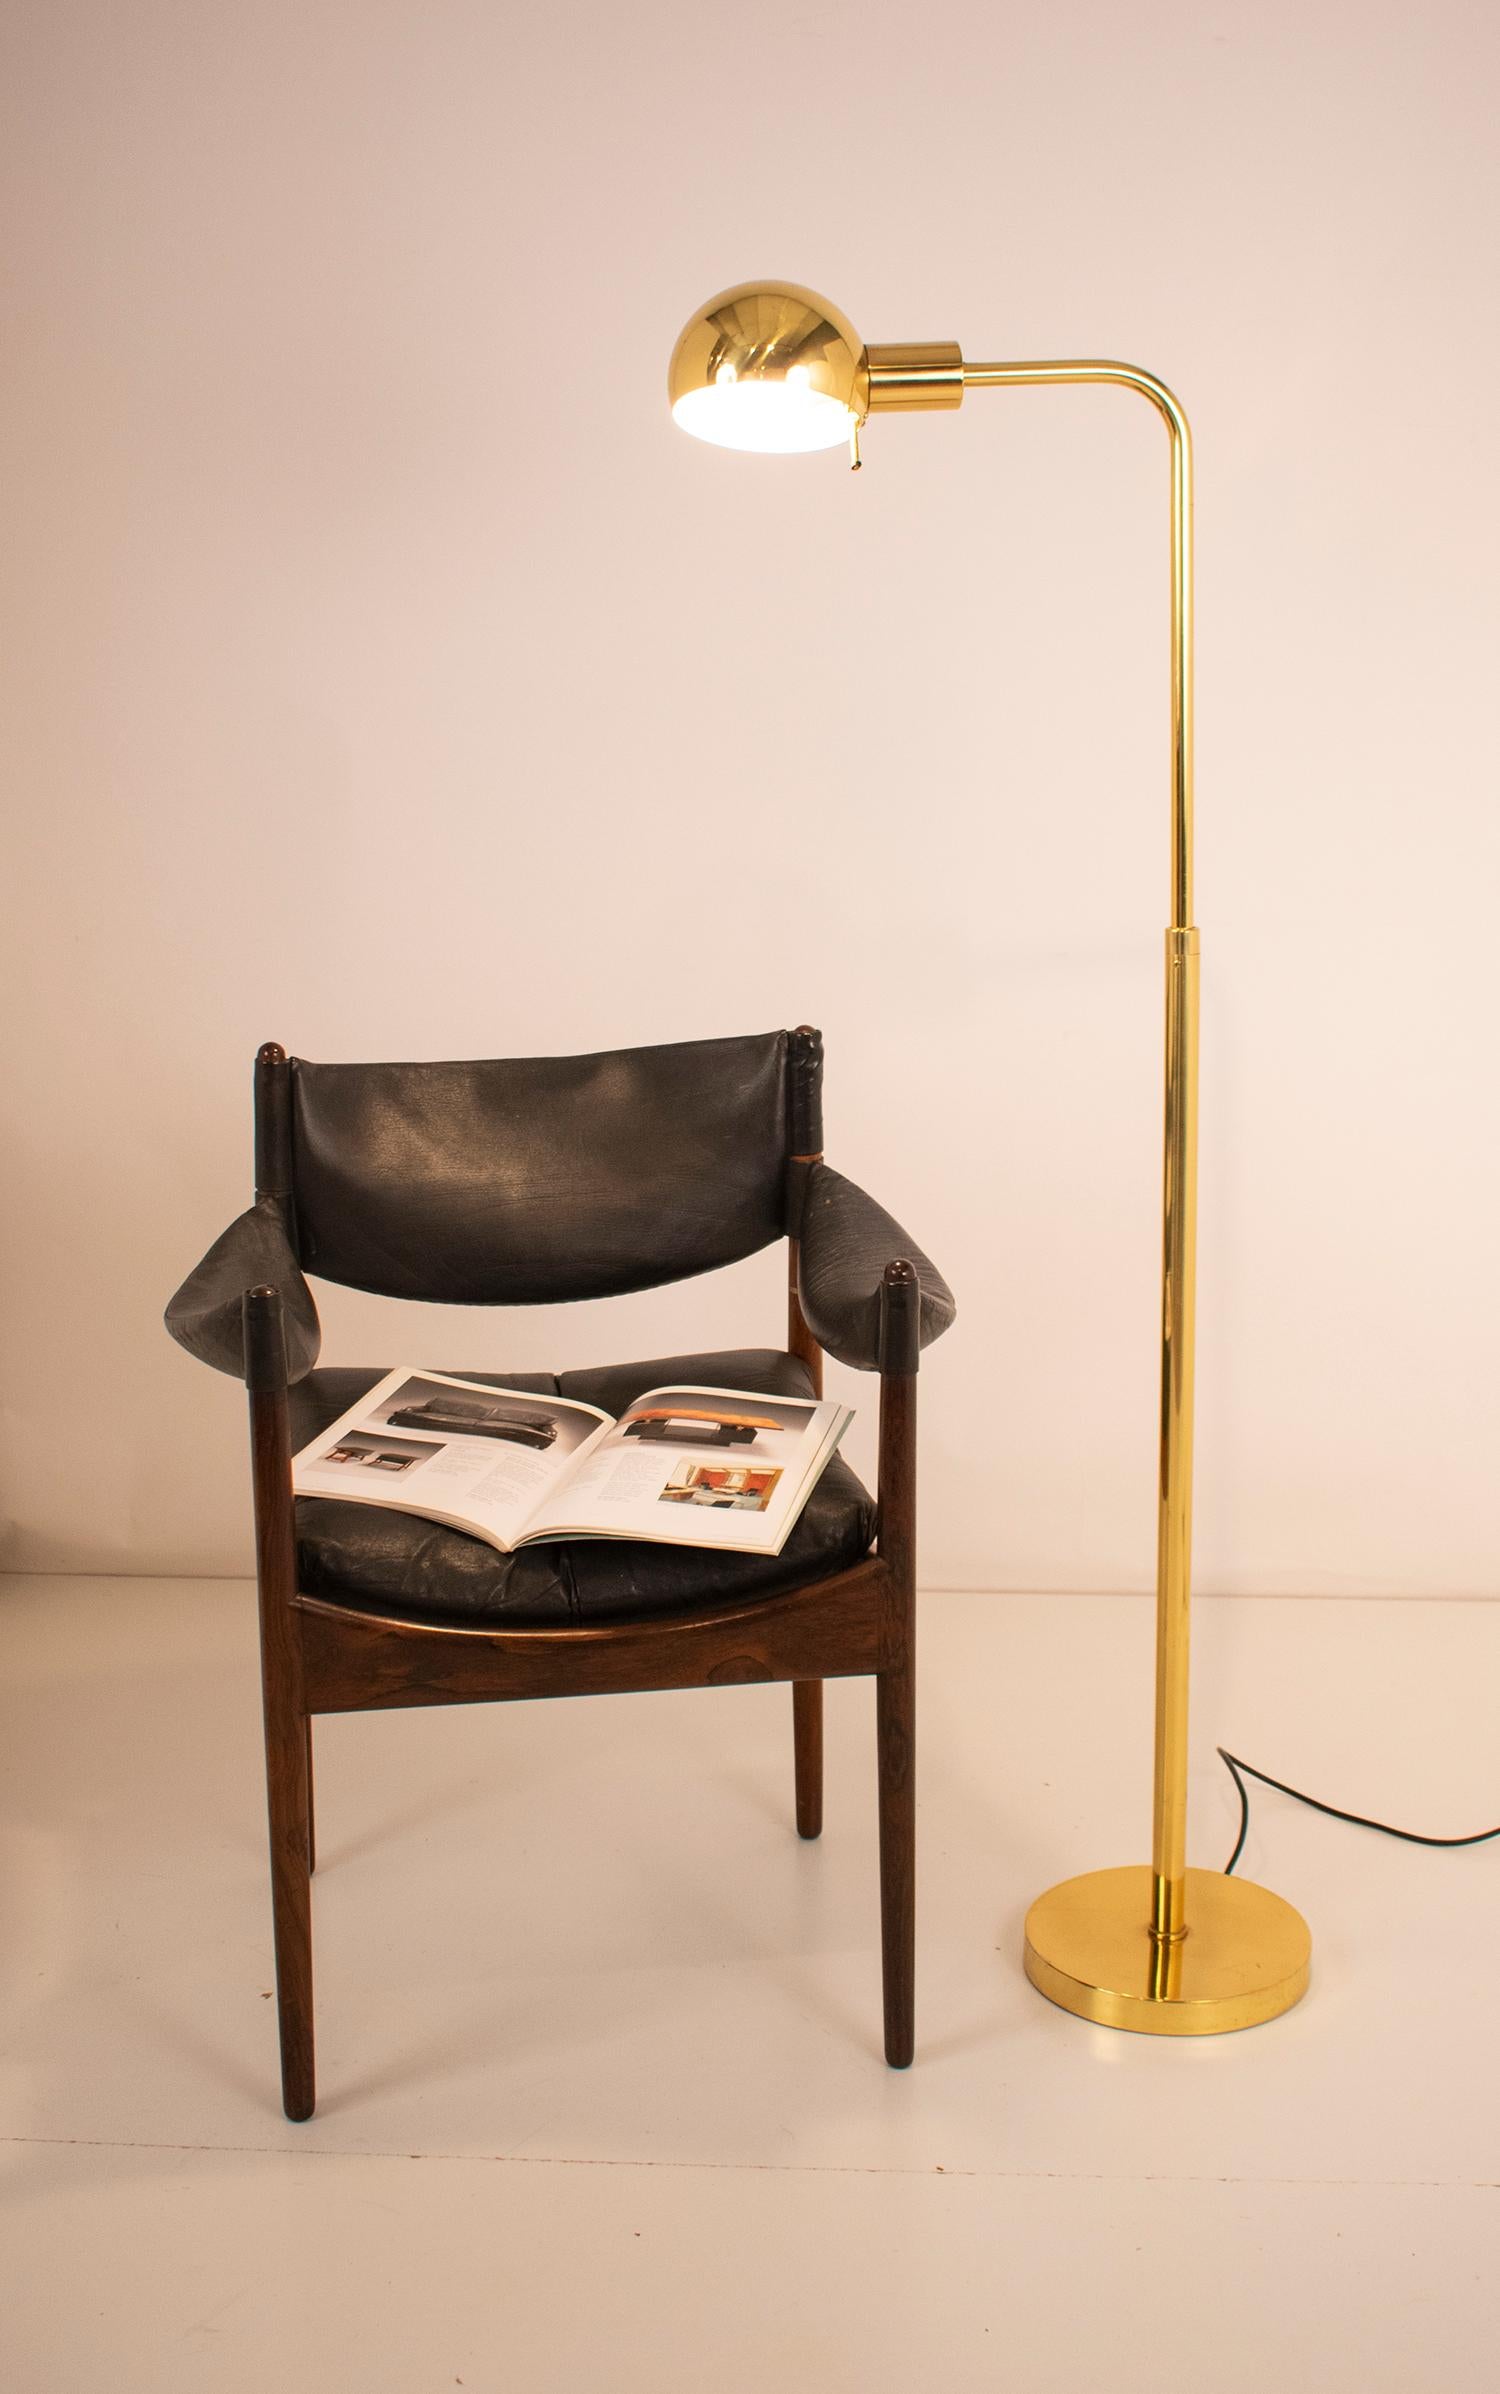 Late 20th Century Adjustable Floor Reading Lamp, Brass, by Metalarte for Hansen, Spain, 1960s